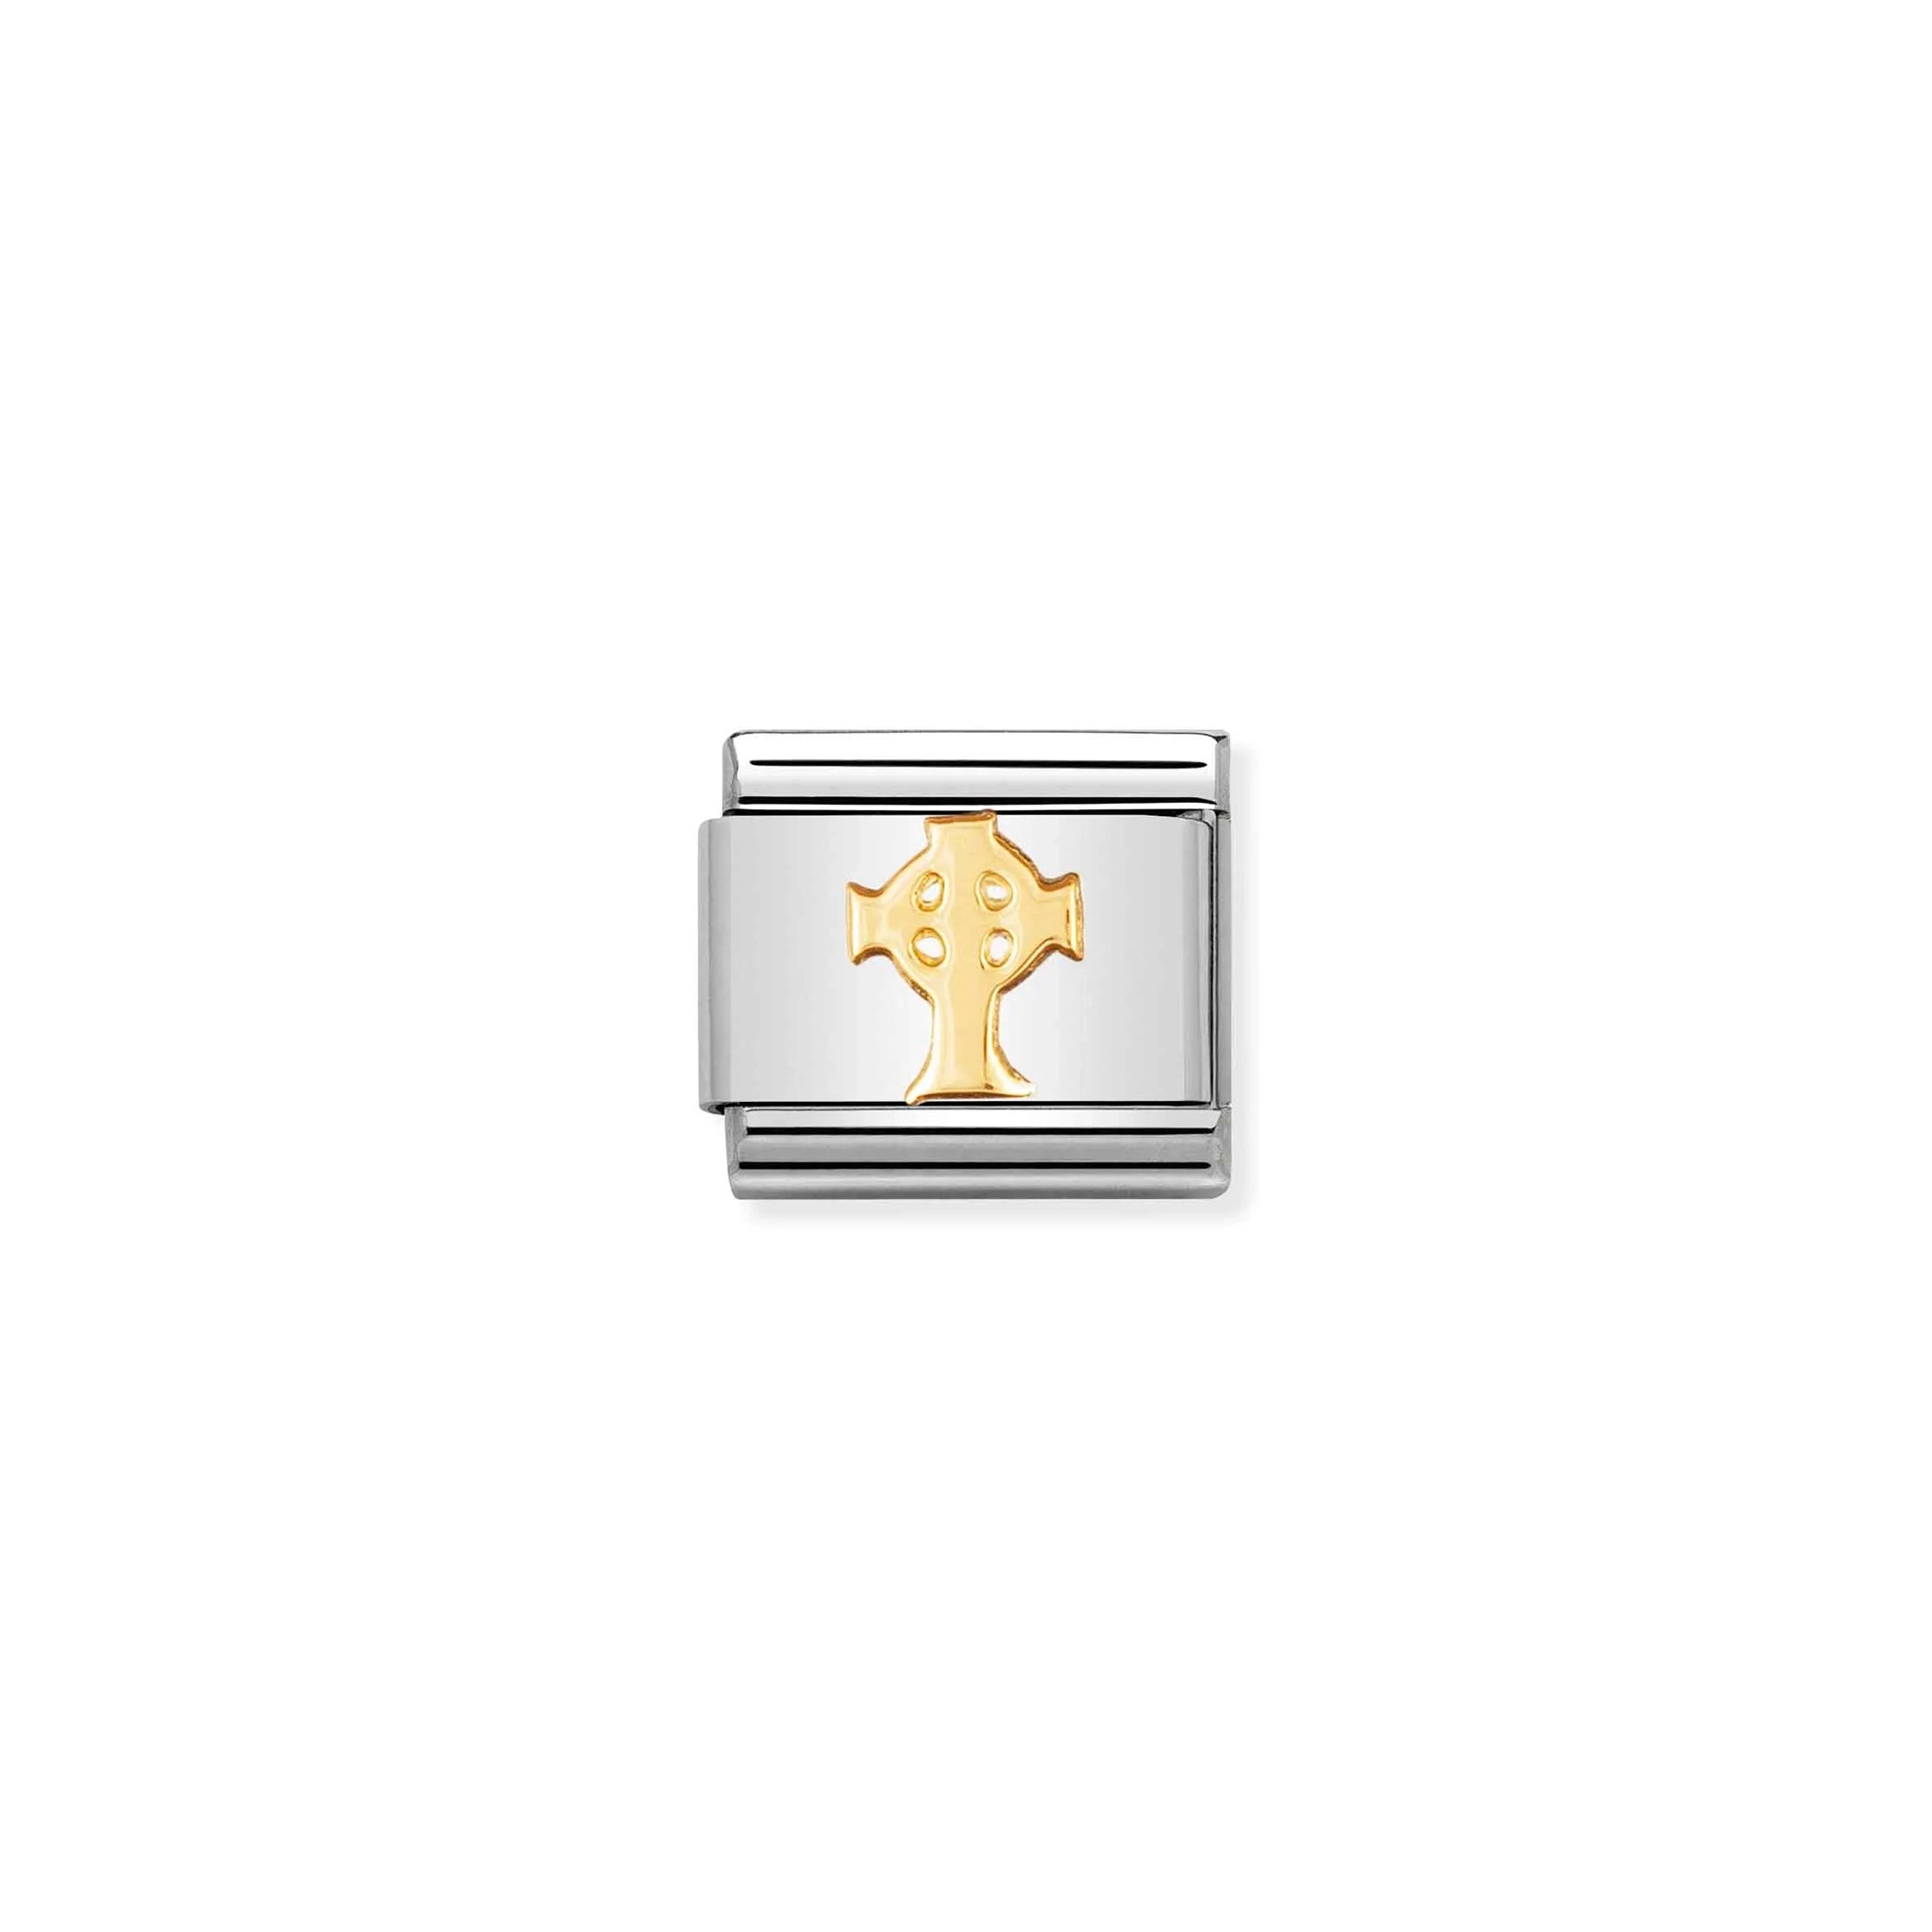 A Nomination charm link featuring a plain gold Celtic cross design